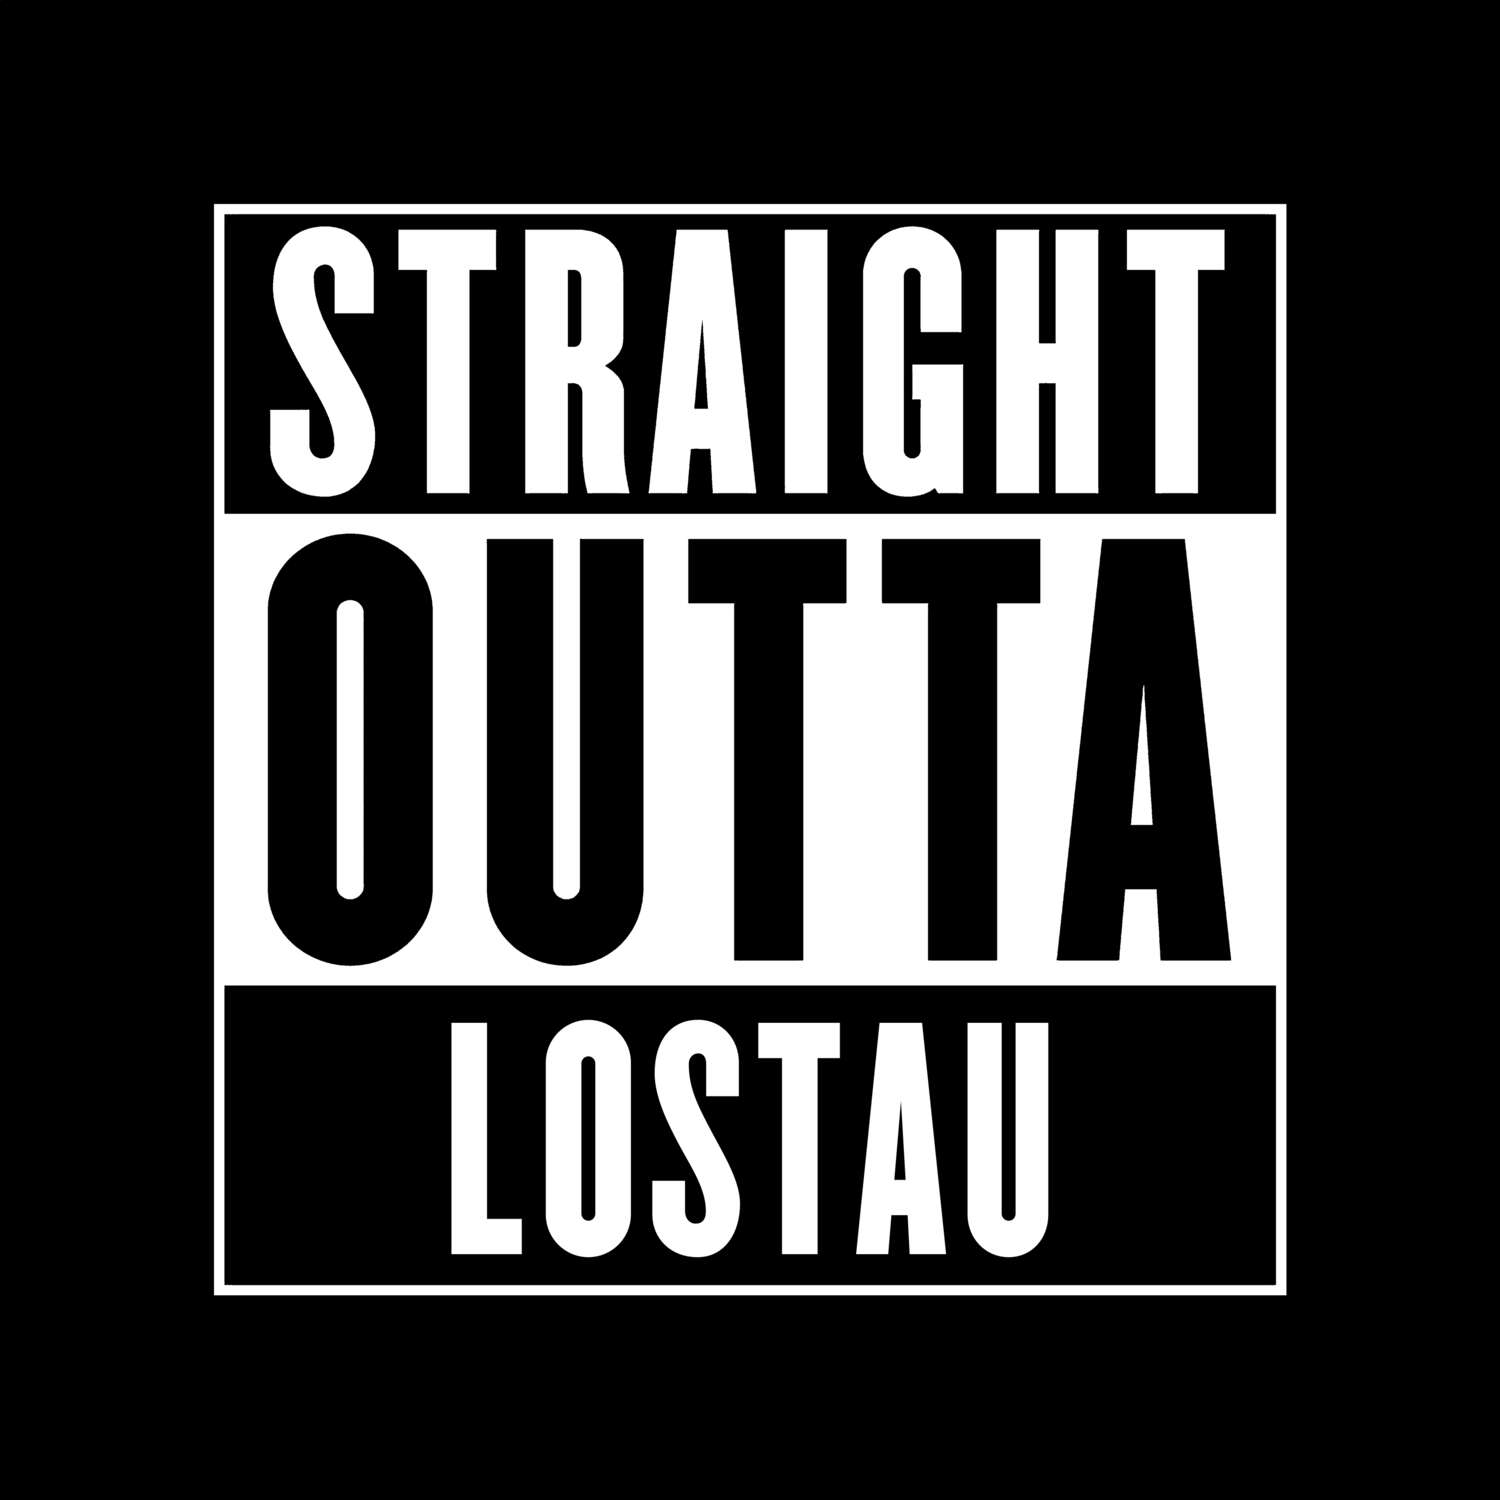 Lostau T-Shirt »Straight Outta«